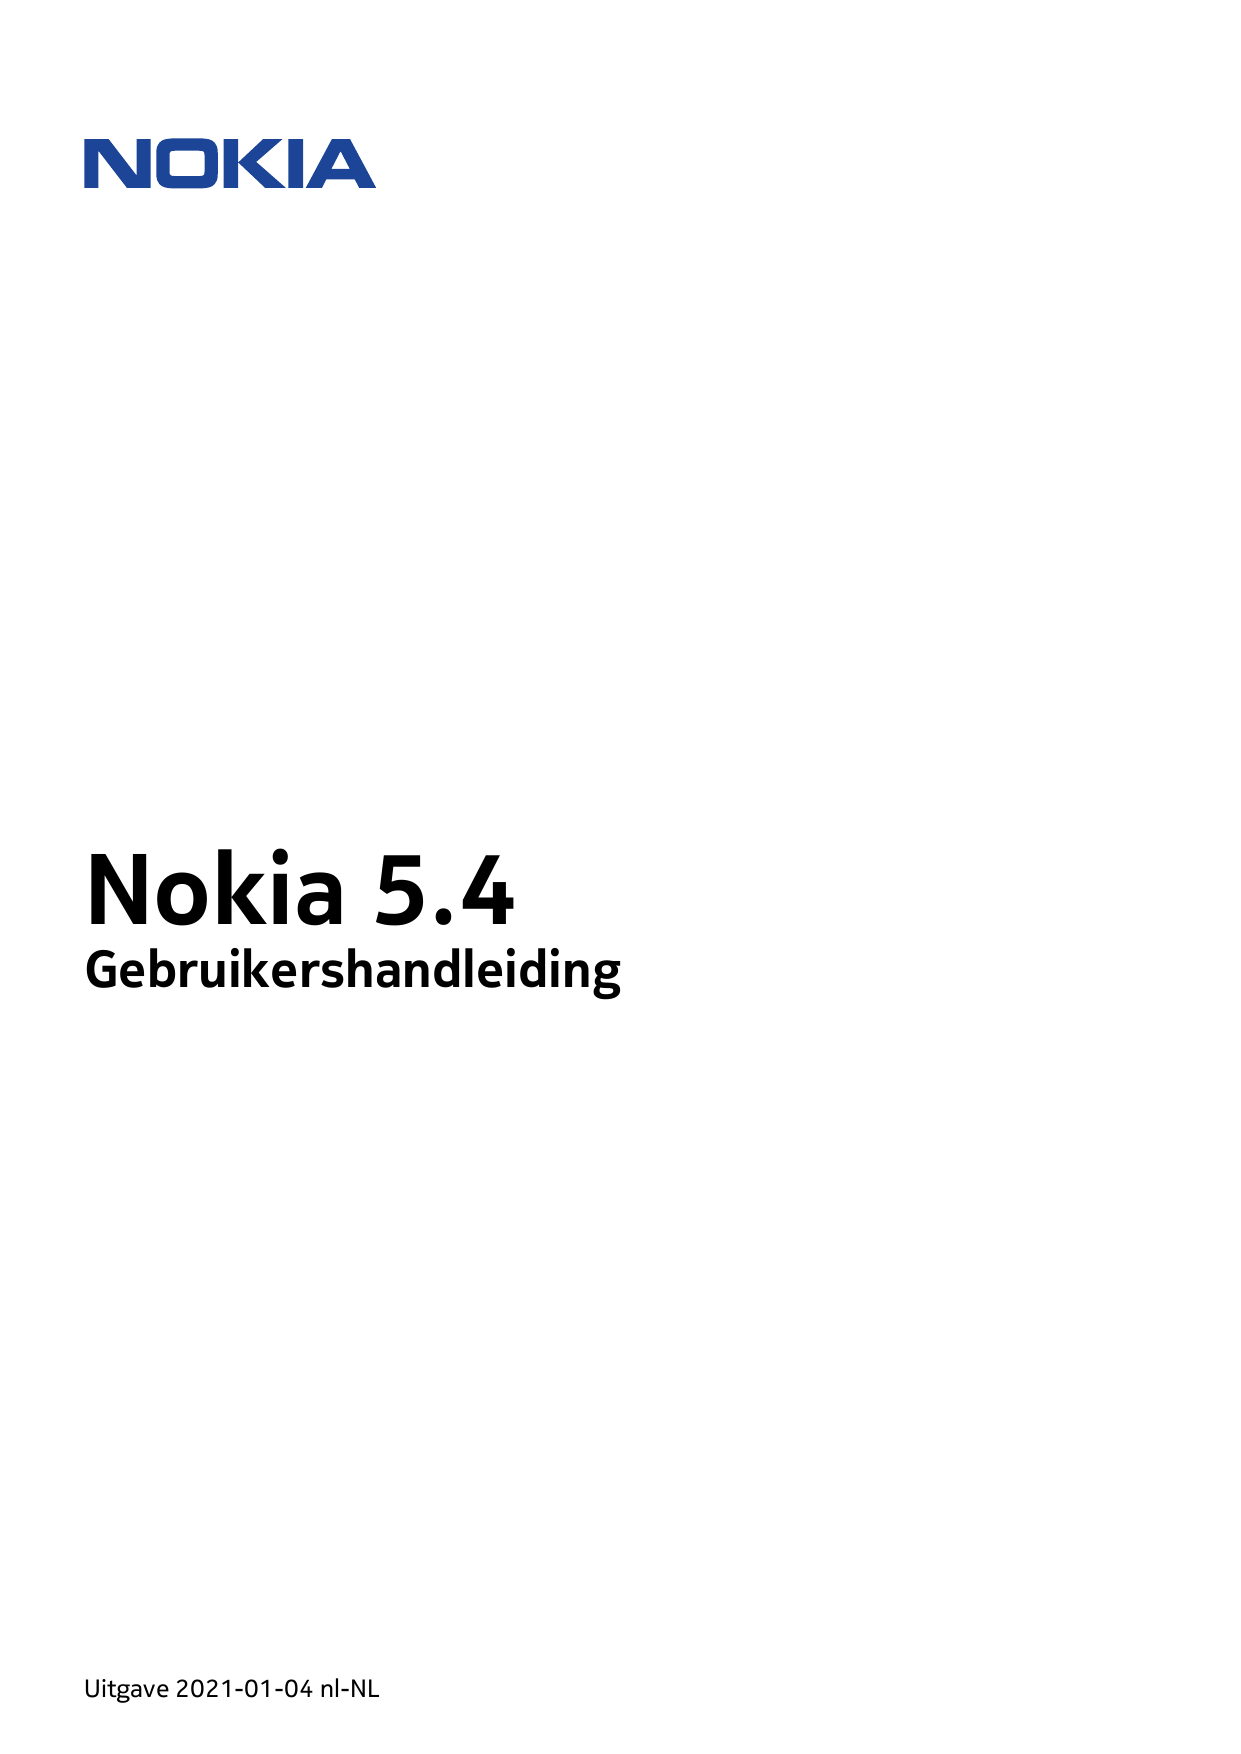 Nokia 5.4GebruikershandleidingUitgave 2021-01-04 nl-NL